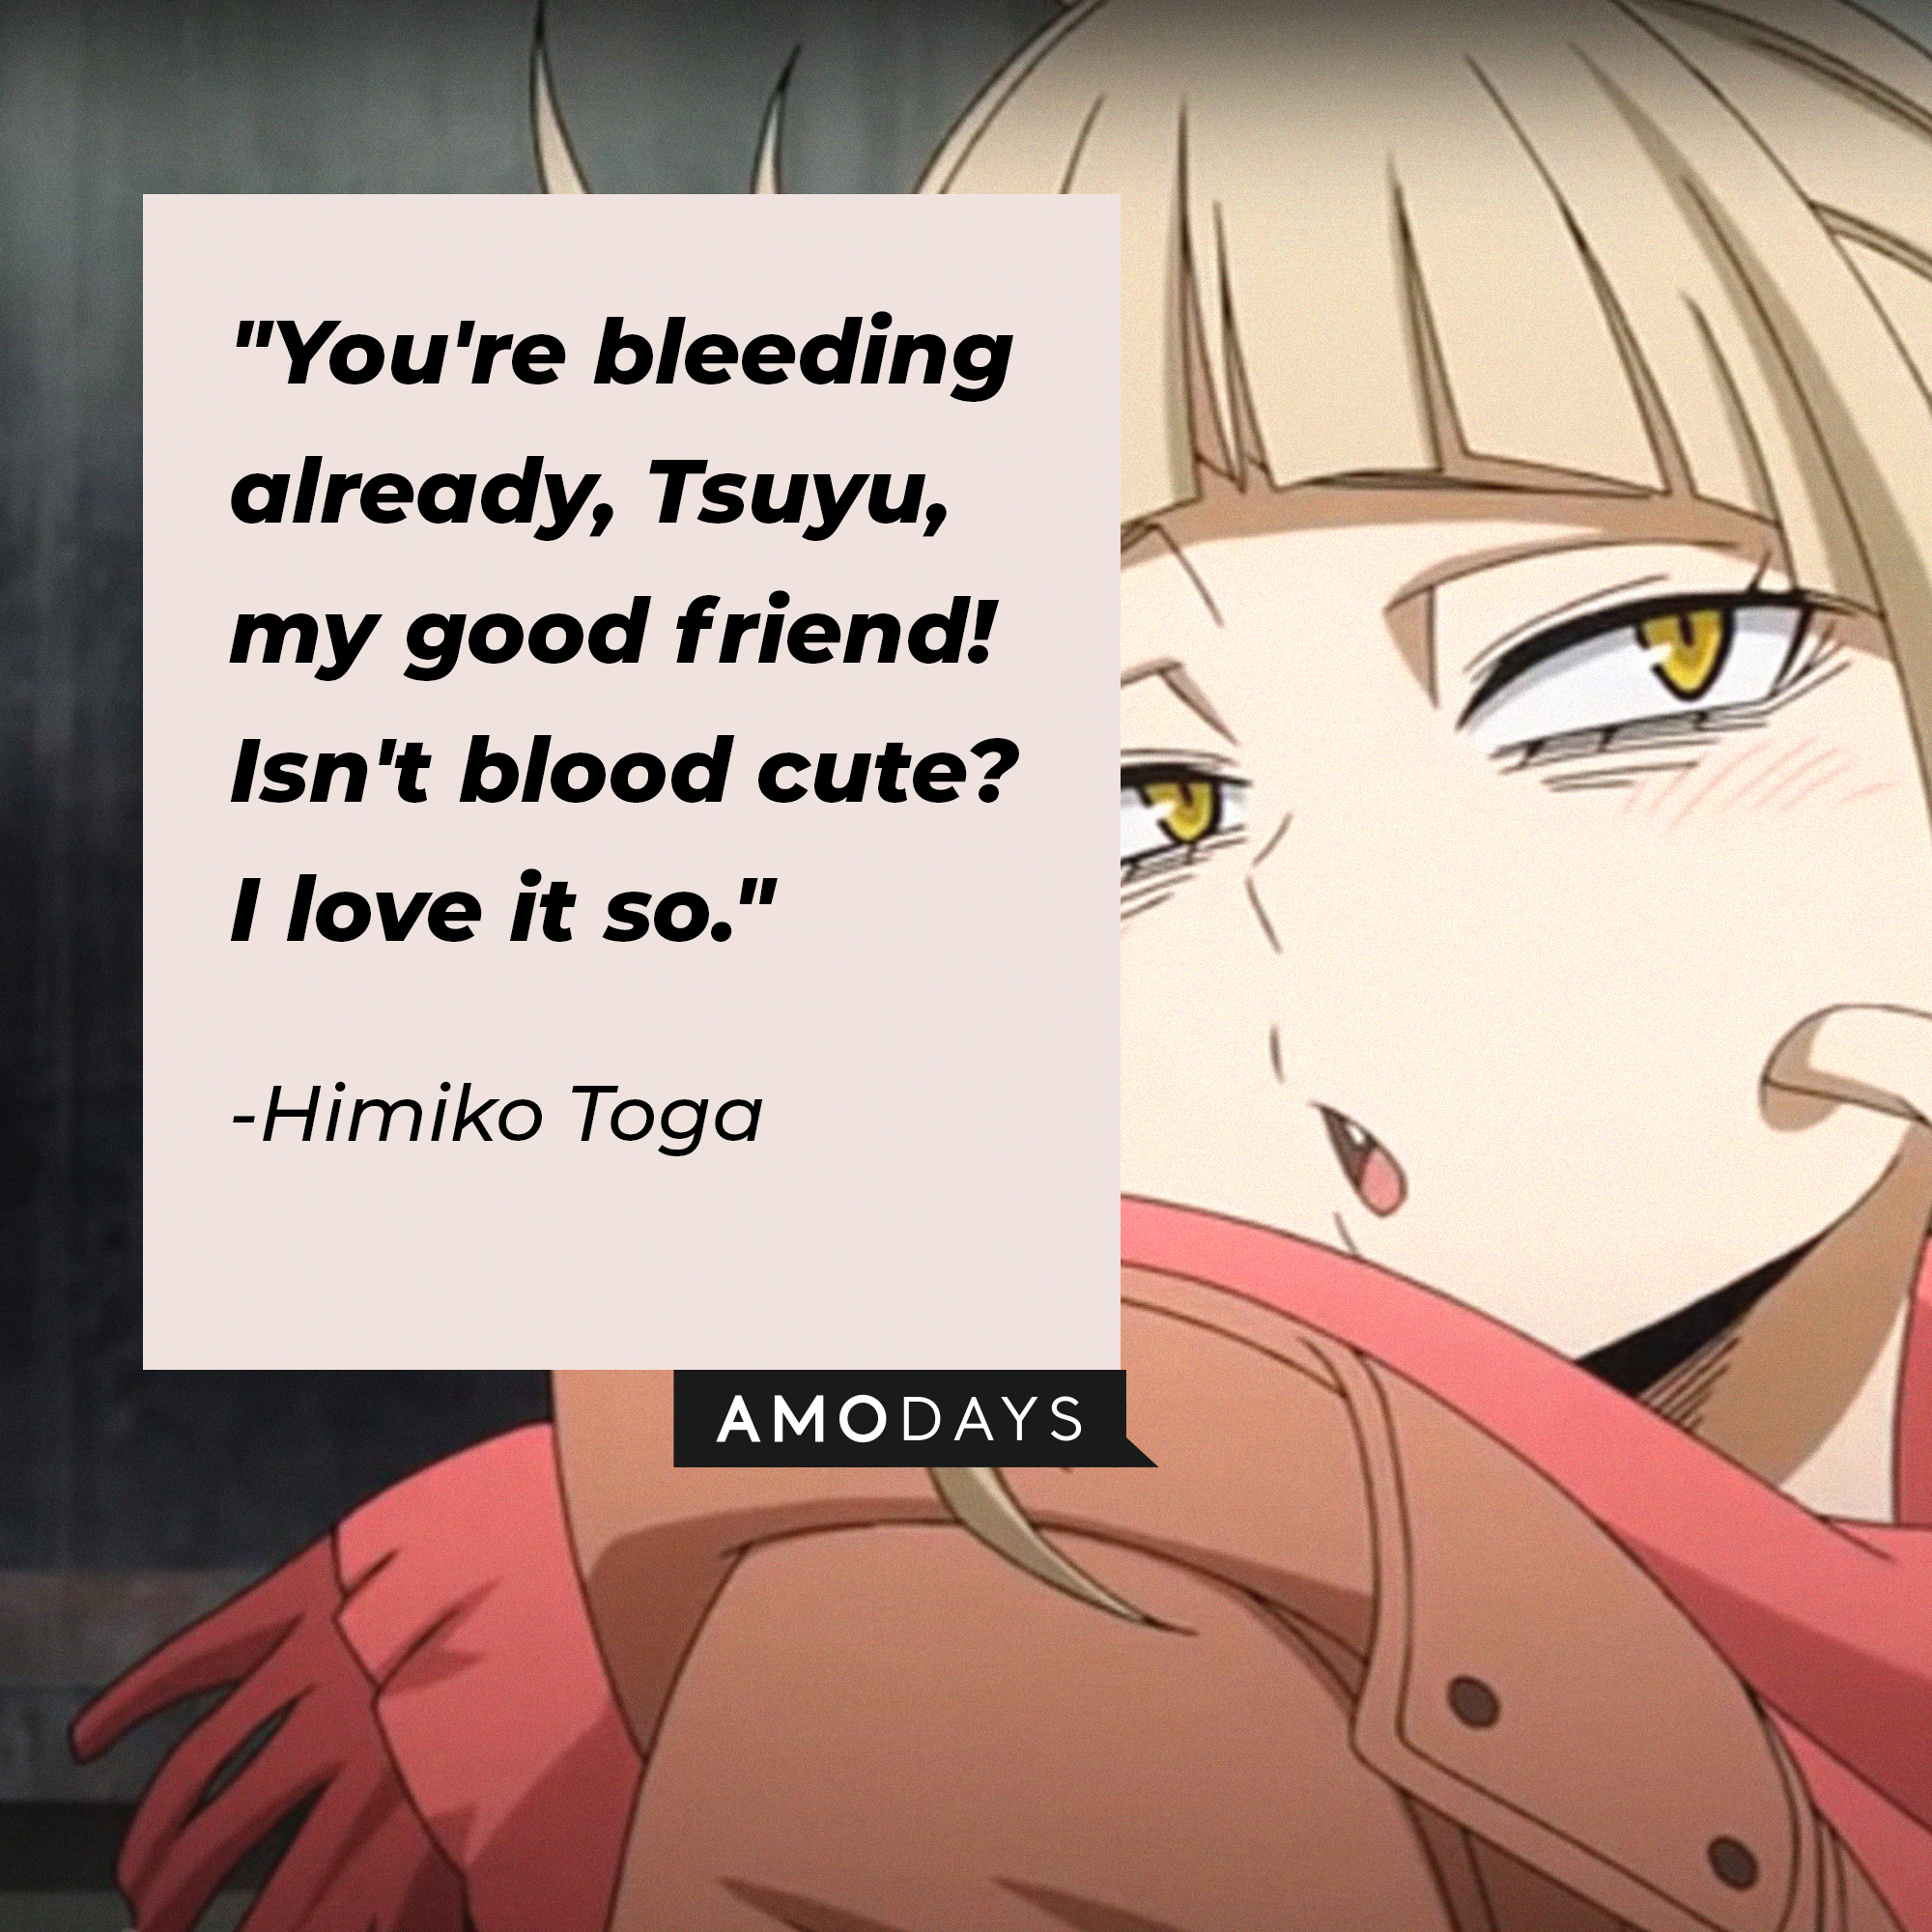 Himiko Toga’s quote: "You're bleeding already, Tsuyu, my good friend! Isn't blood cute? I love it so." | Image: AmoDays